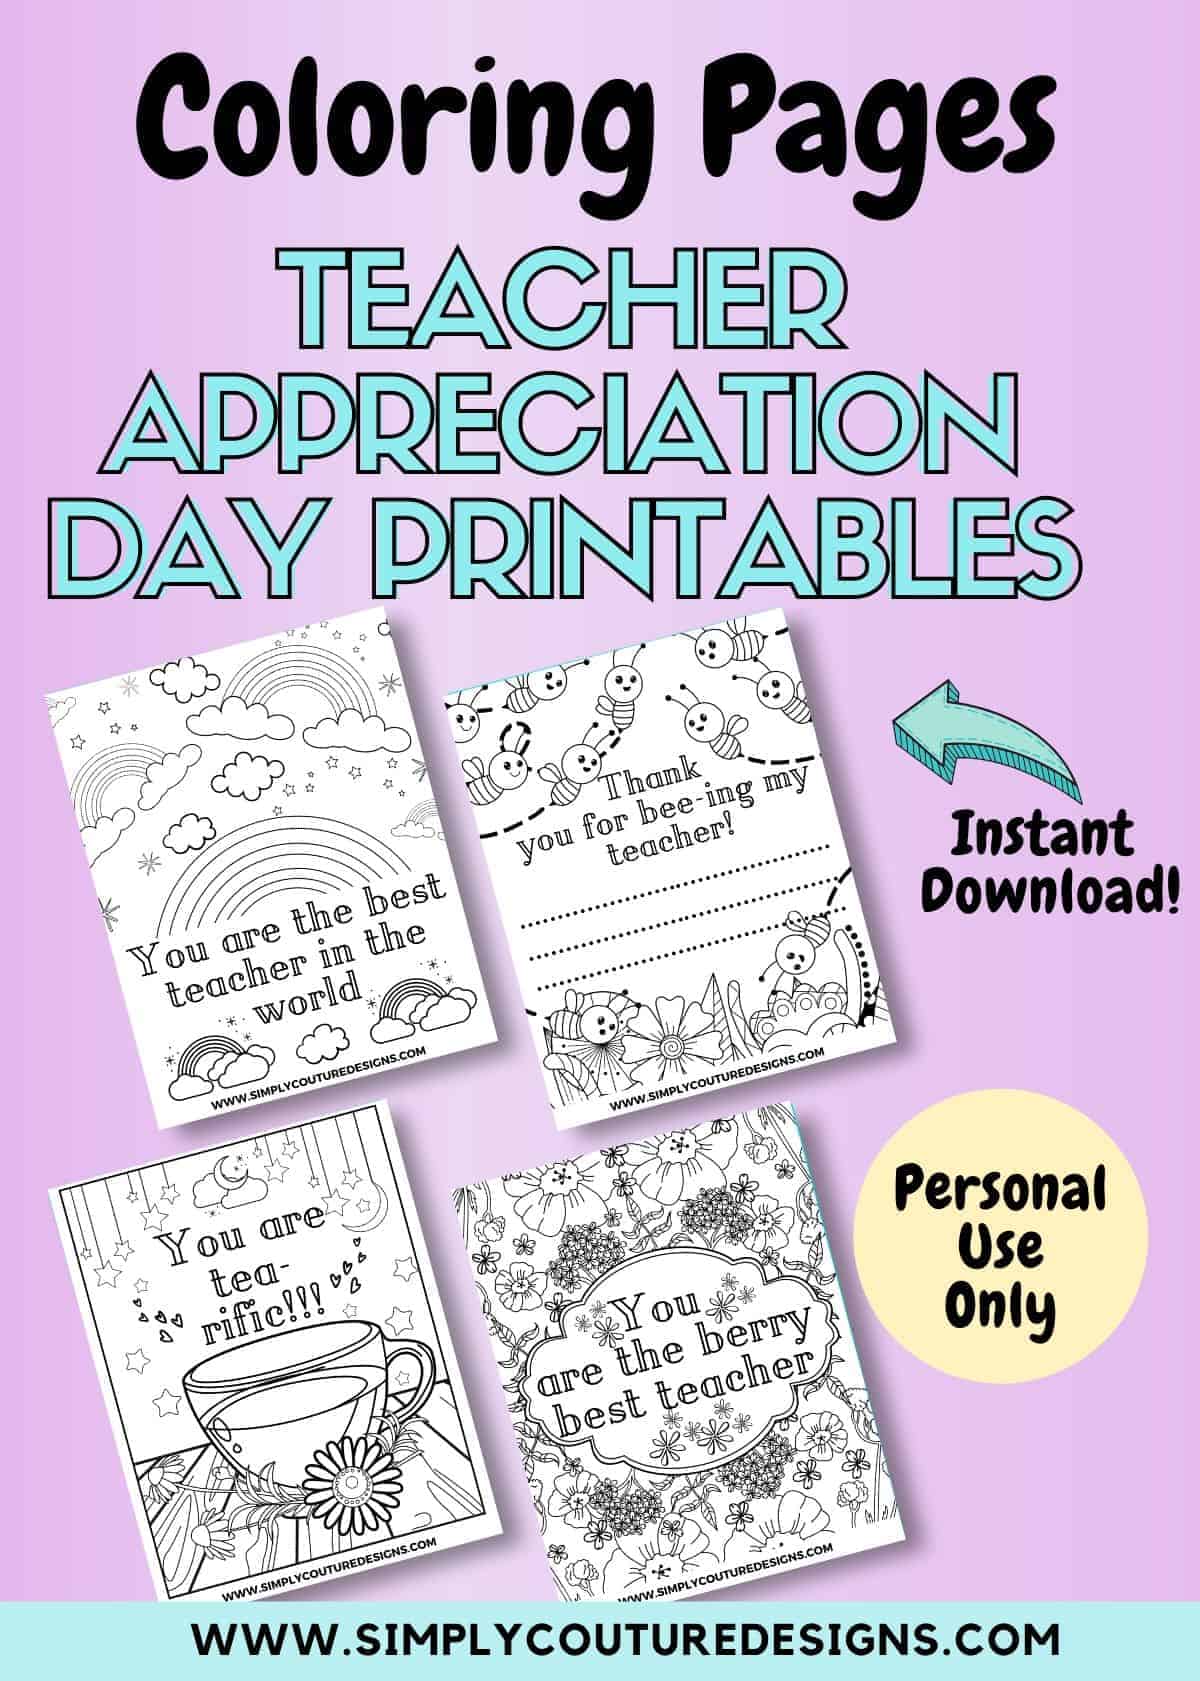 Teacher appreciation day coloring page printables #teacherappreciation #coloringpages #coloringpage #printables